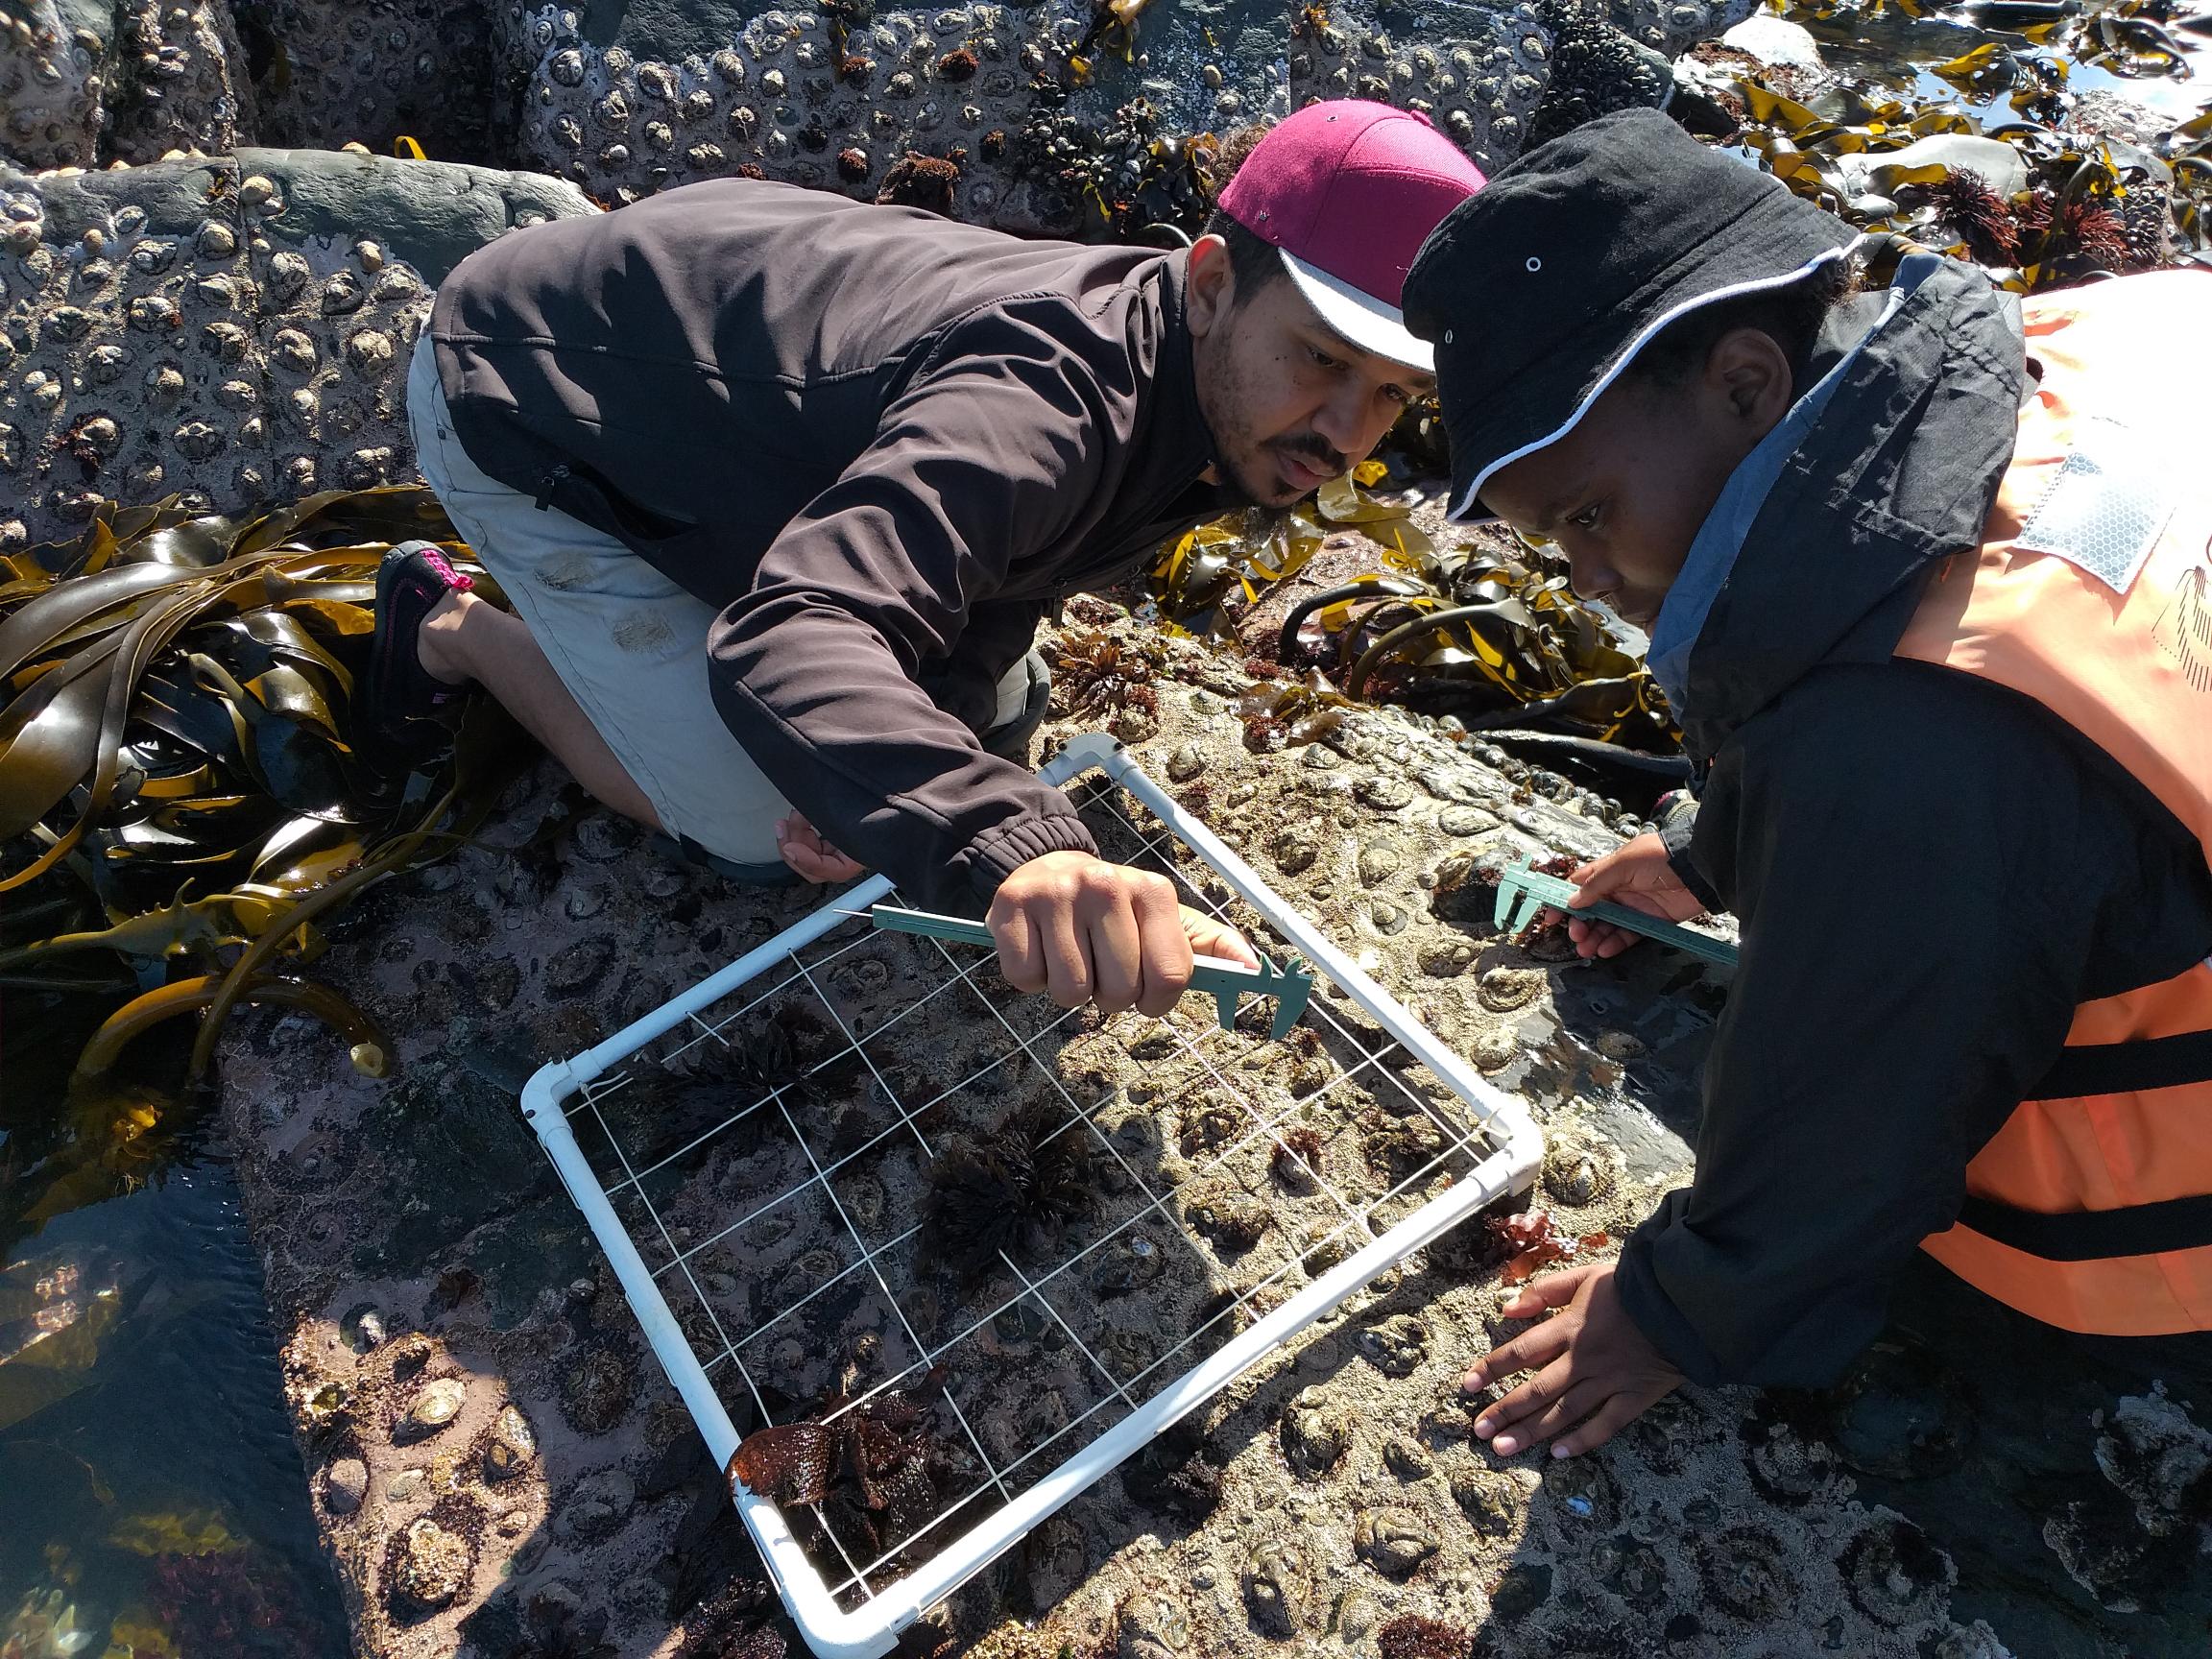 Intertidal zone monitoring, Ganzekraal Conservation Area: credit Natalie Hayward, CapeNature